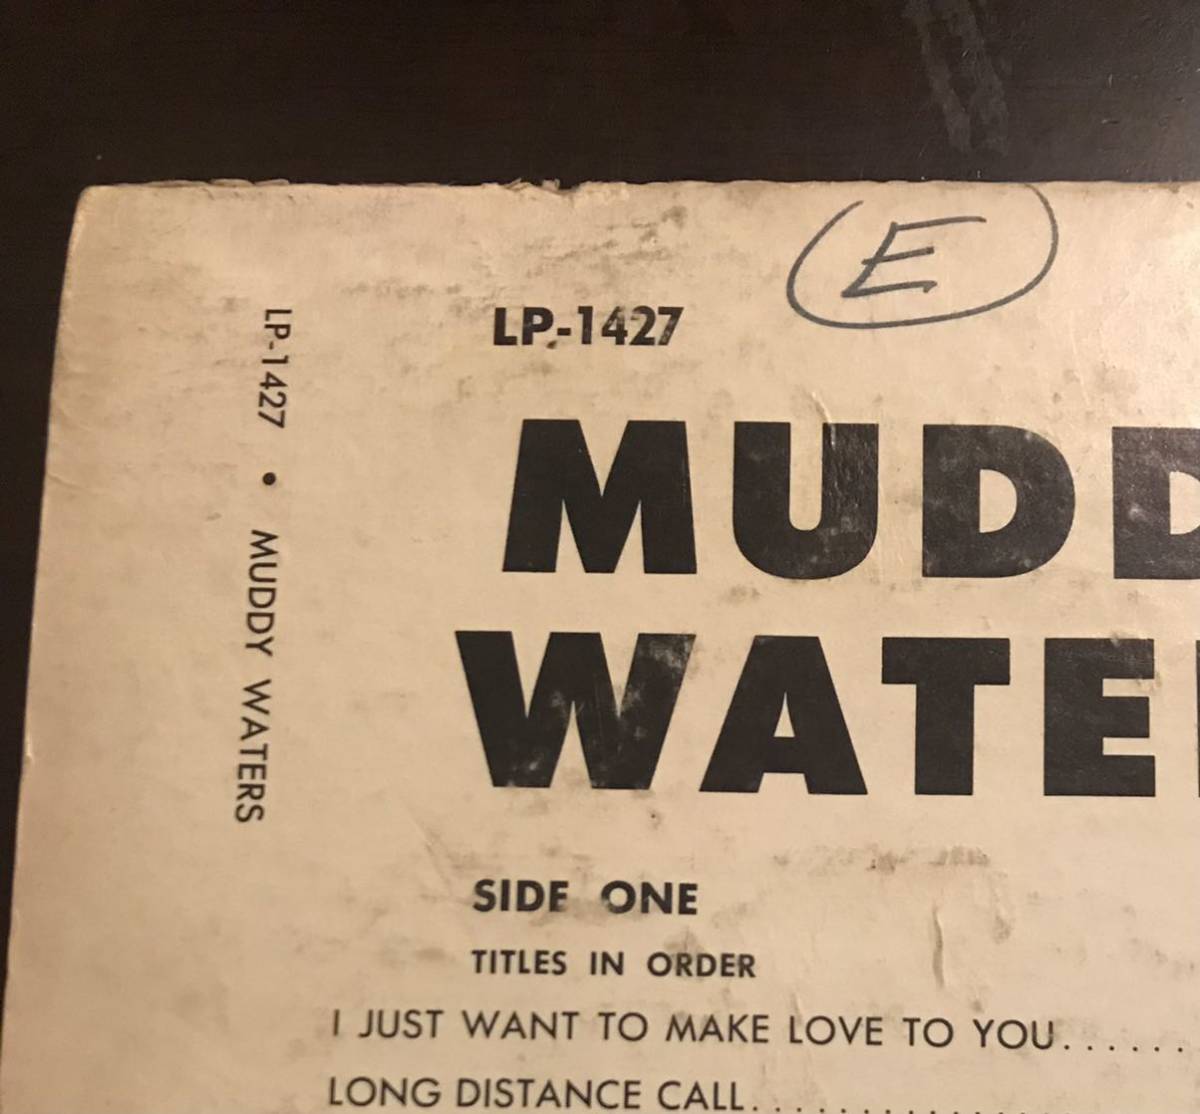 ■USオリジナル盤■MUDDY WATERS ■マディ・ウォーターズ■The Best Of Muddy Waters / 1LP / Stereo / Chess 1427 / US Original / Blues_画像3